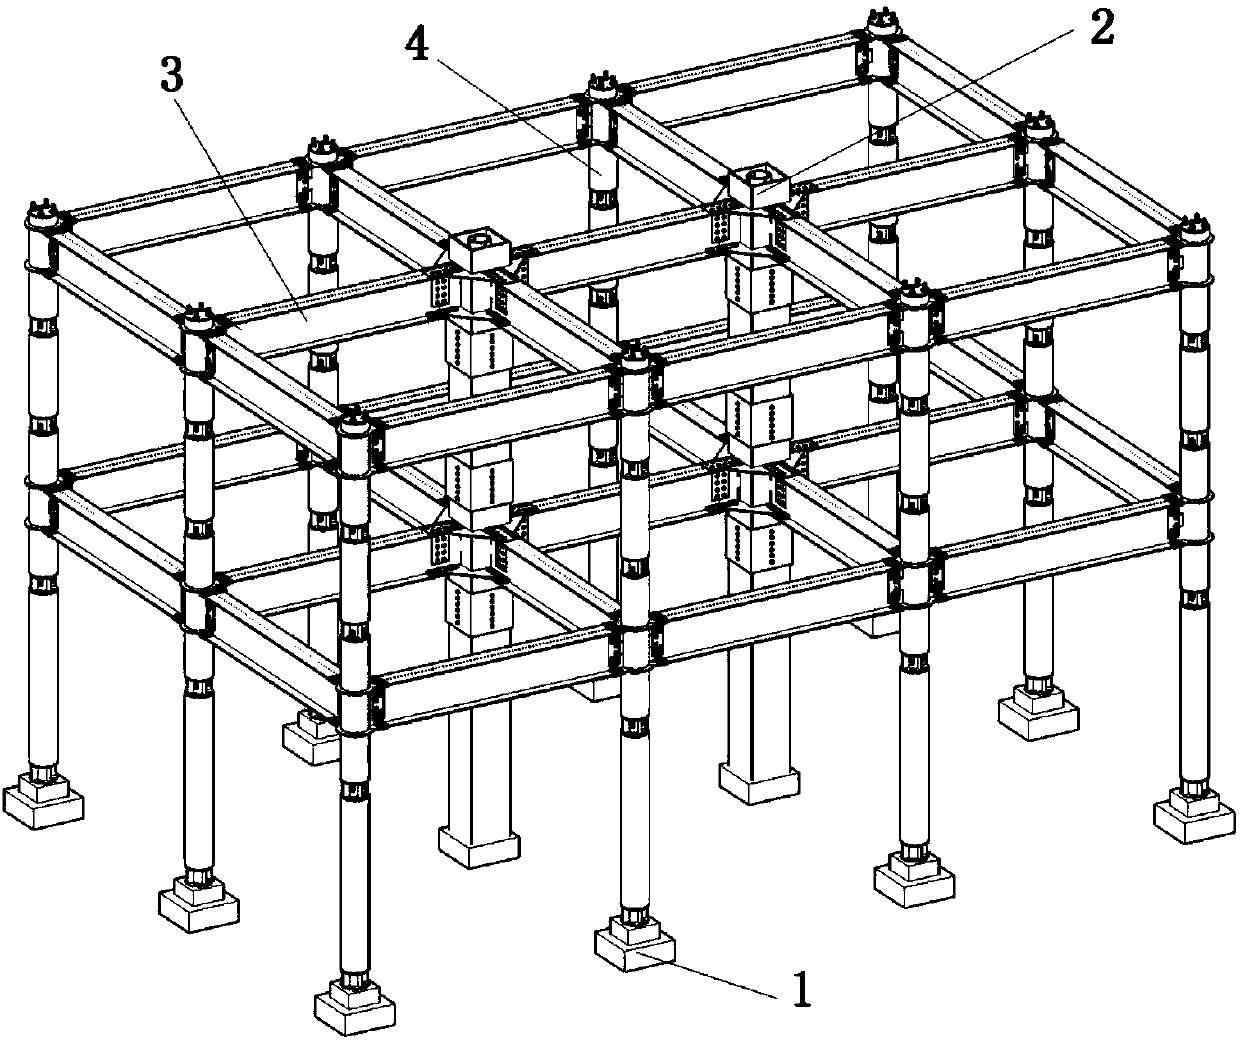 Total assembled steel framework structural system with restoration function